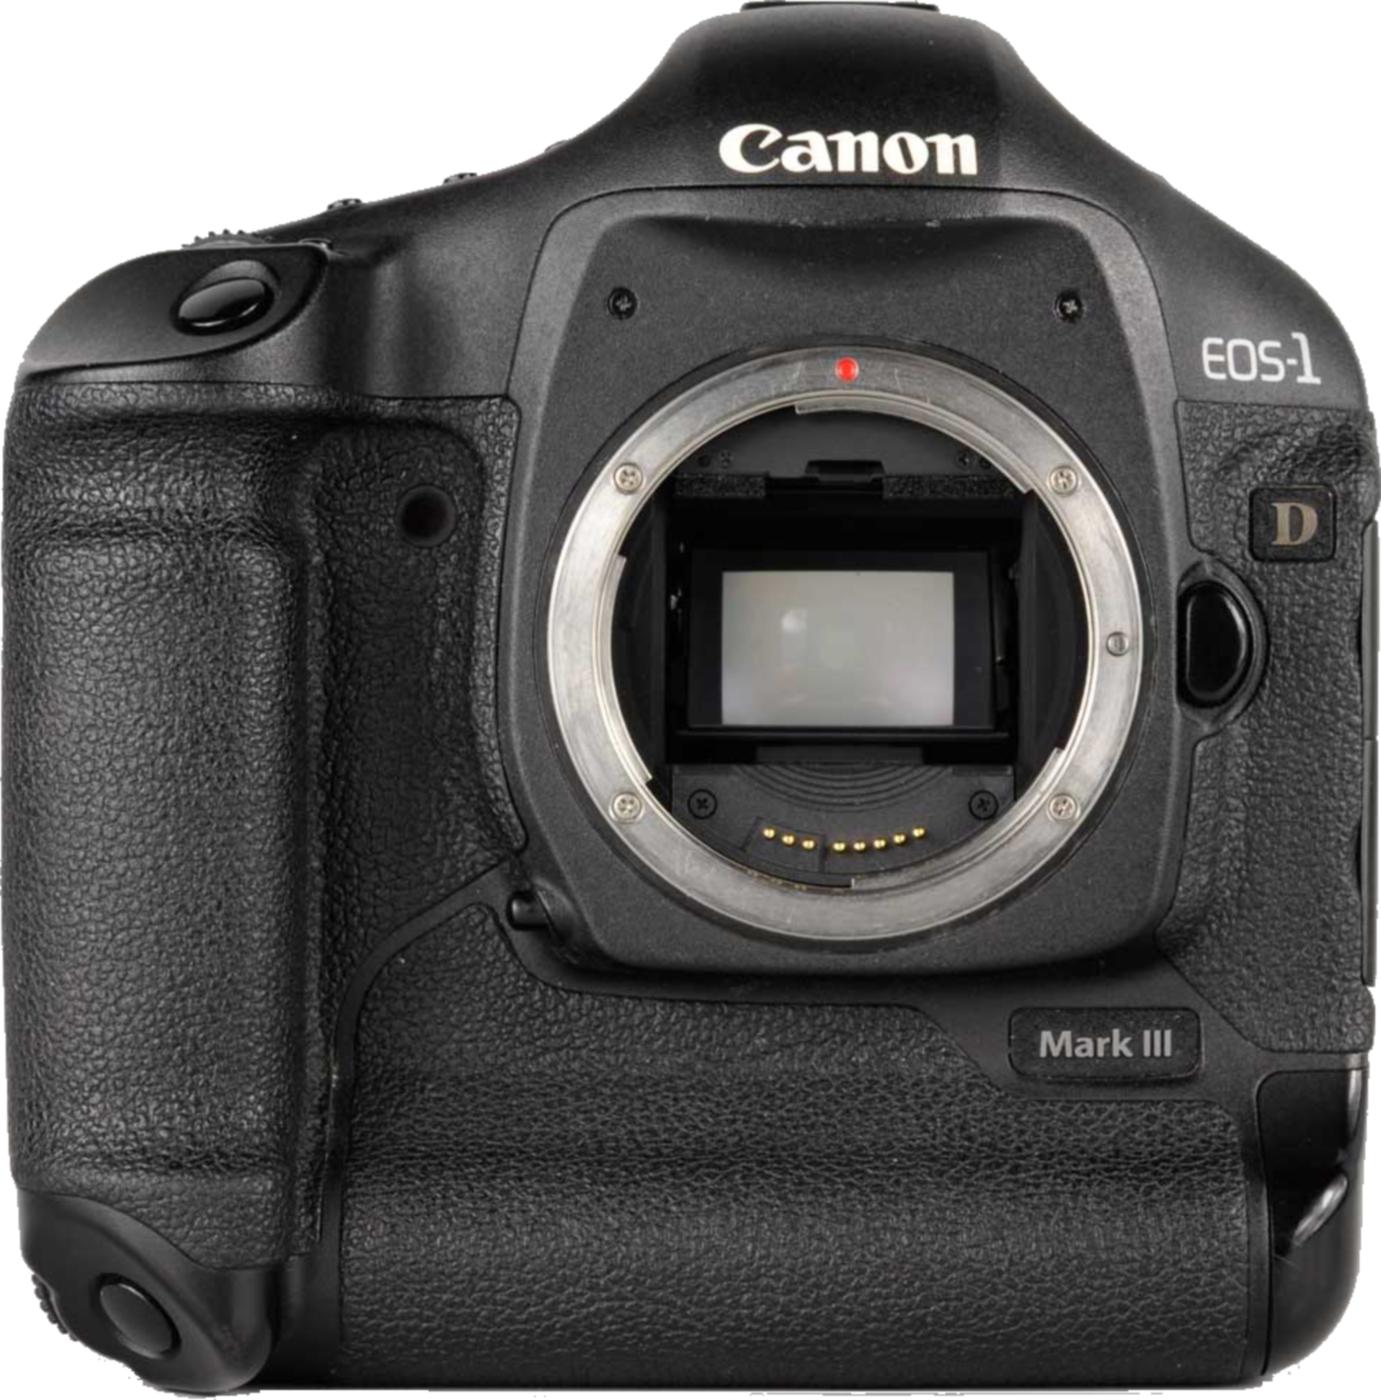 Canon eos 1d mark. Canon EOS 1ds Mark lll. Canon 1d Mark III. EOS 1d Mark III. Canon EOS 1d Mark 3.